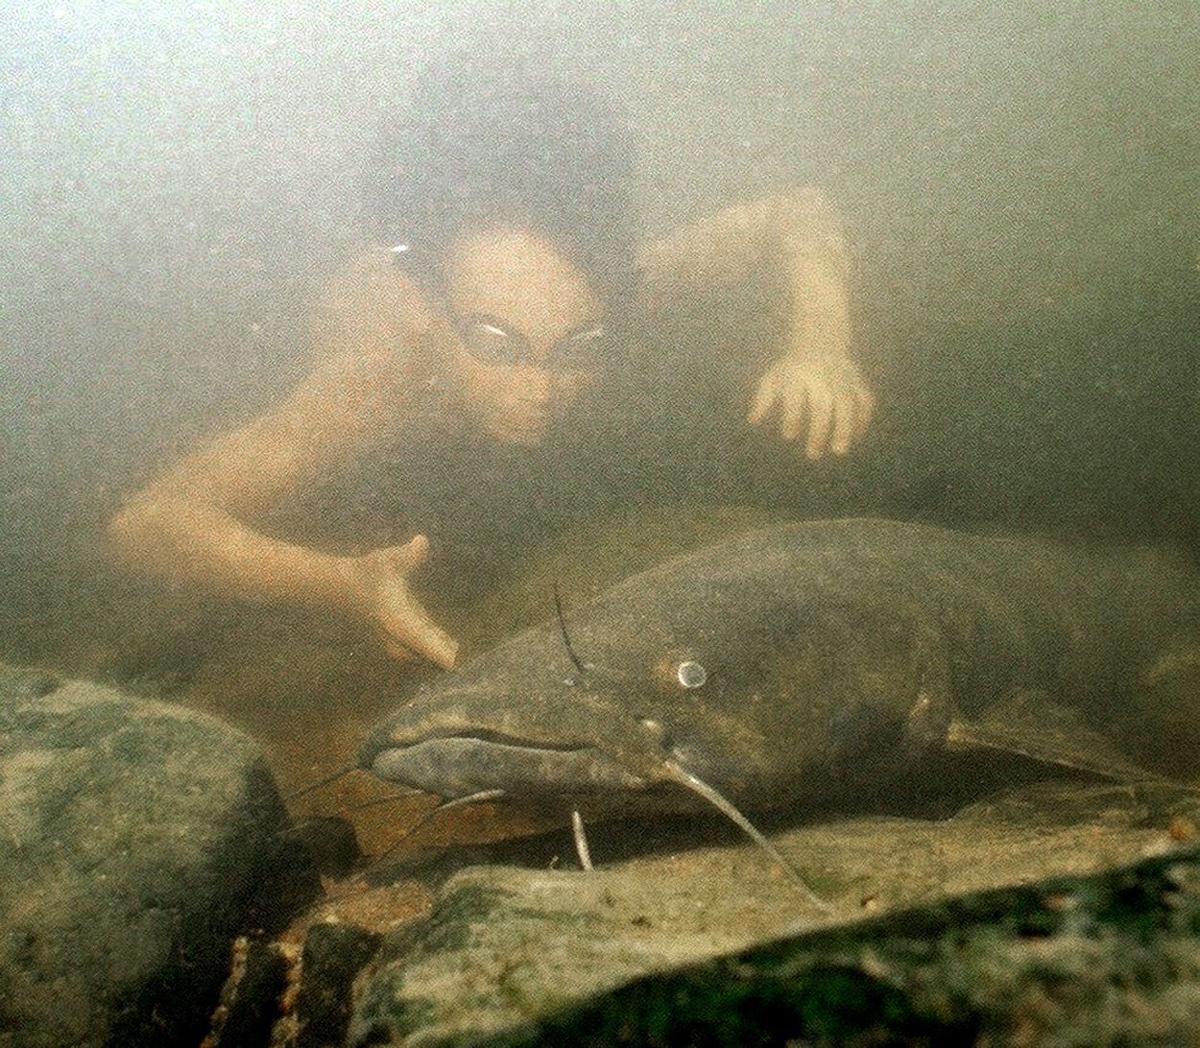 Underwater in the James - flathead catfish